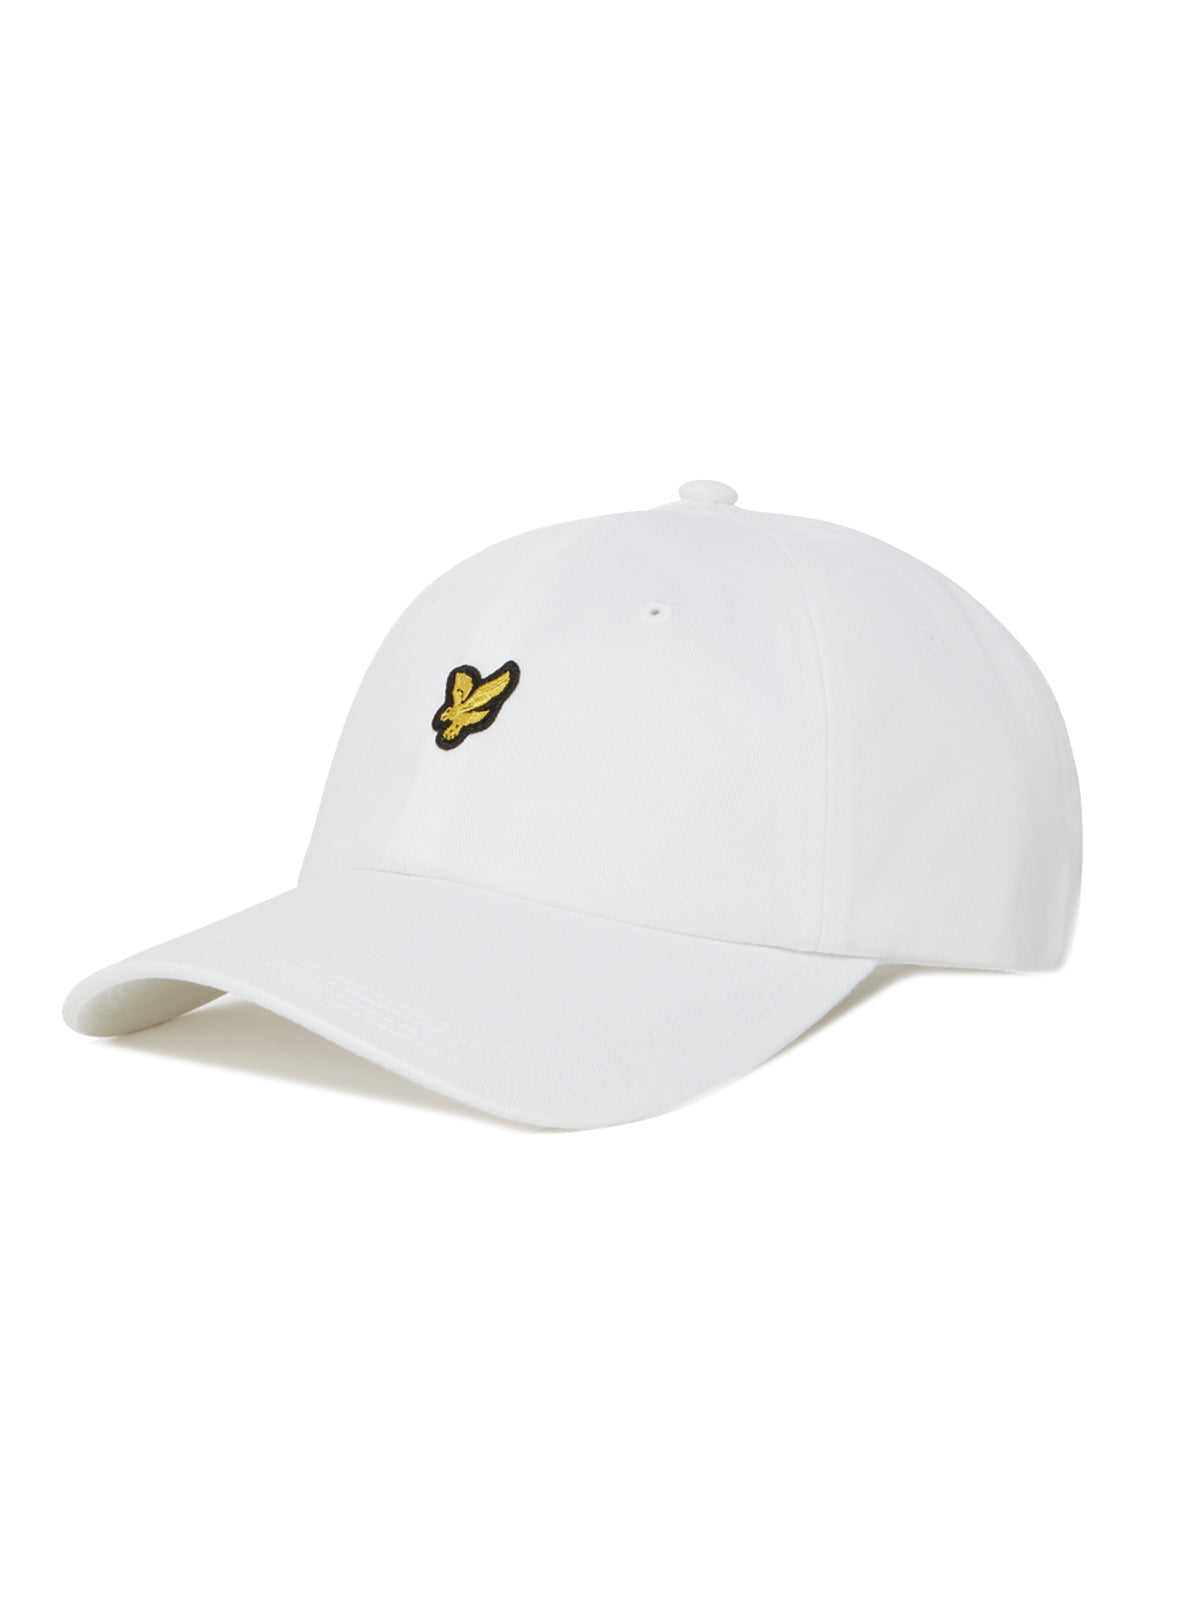 Cappellini da baseball Uomo Lyle & Scott - Baseball Cap - Bianco